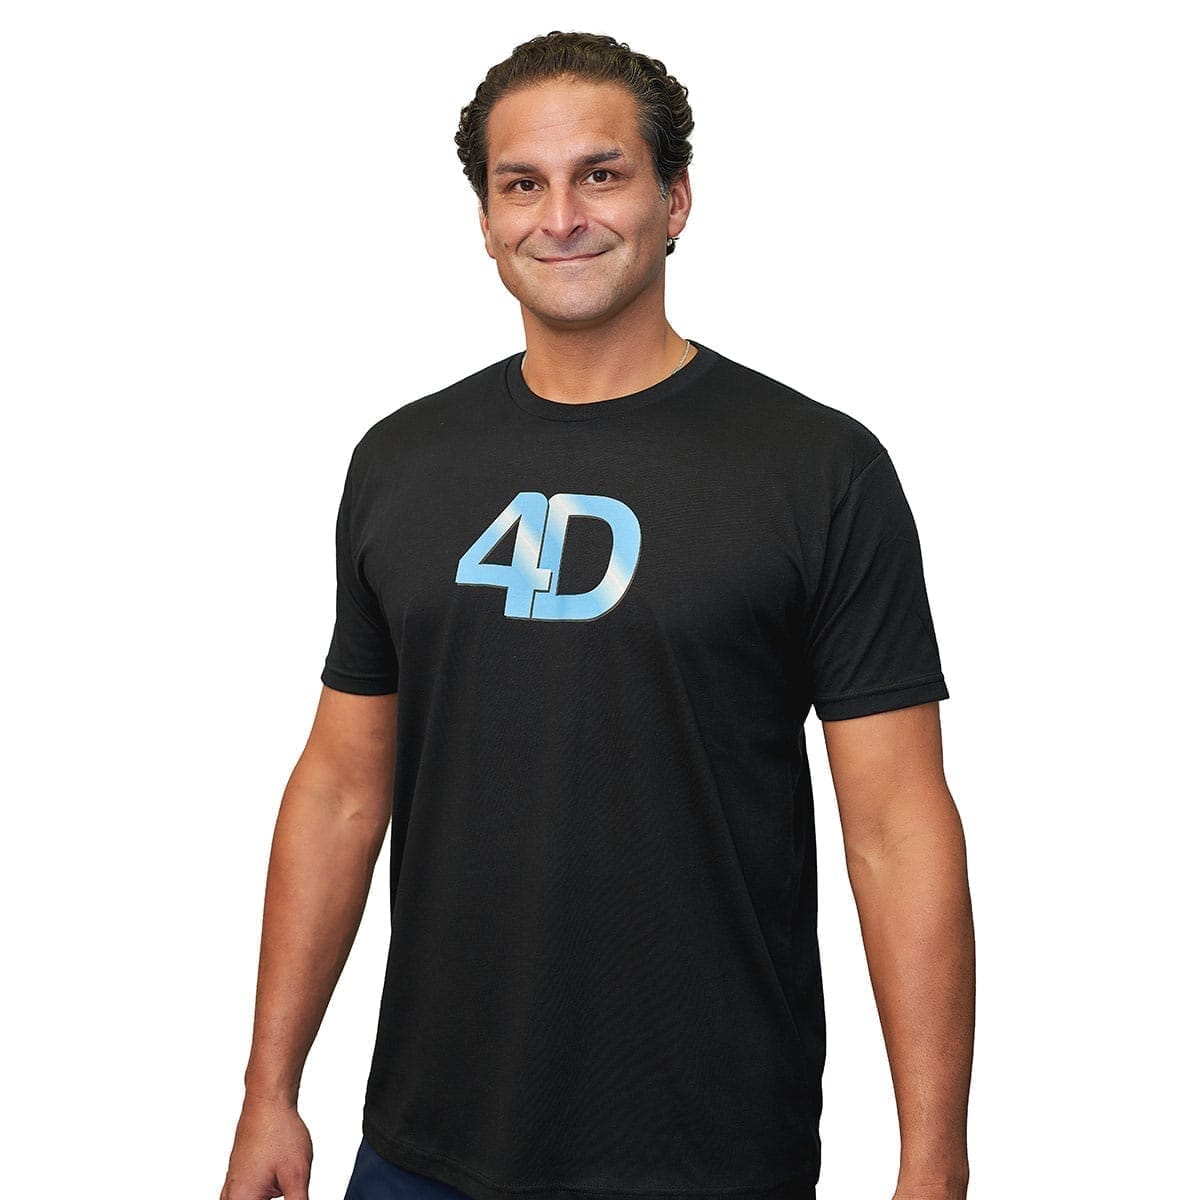 T-Shirt Shirts & Tops 4D S Male 